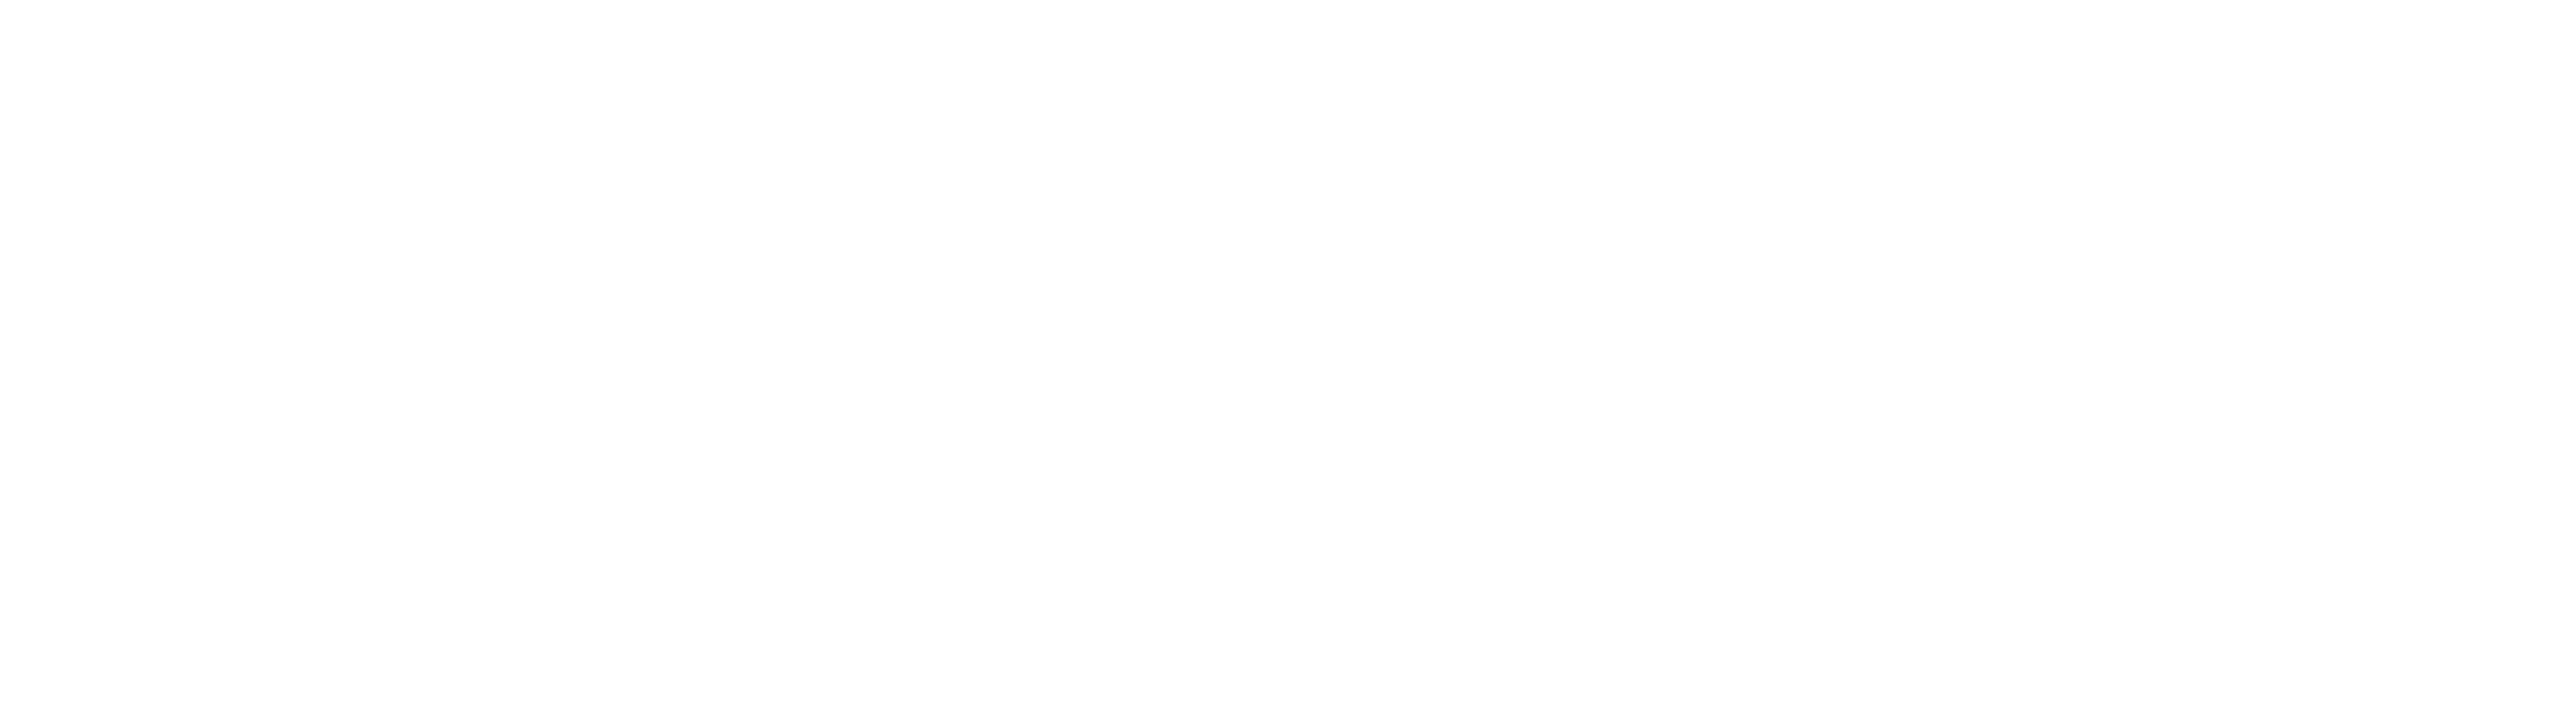 Asisat Oshoala Academy